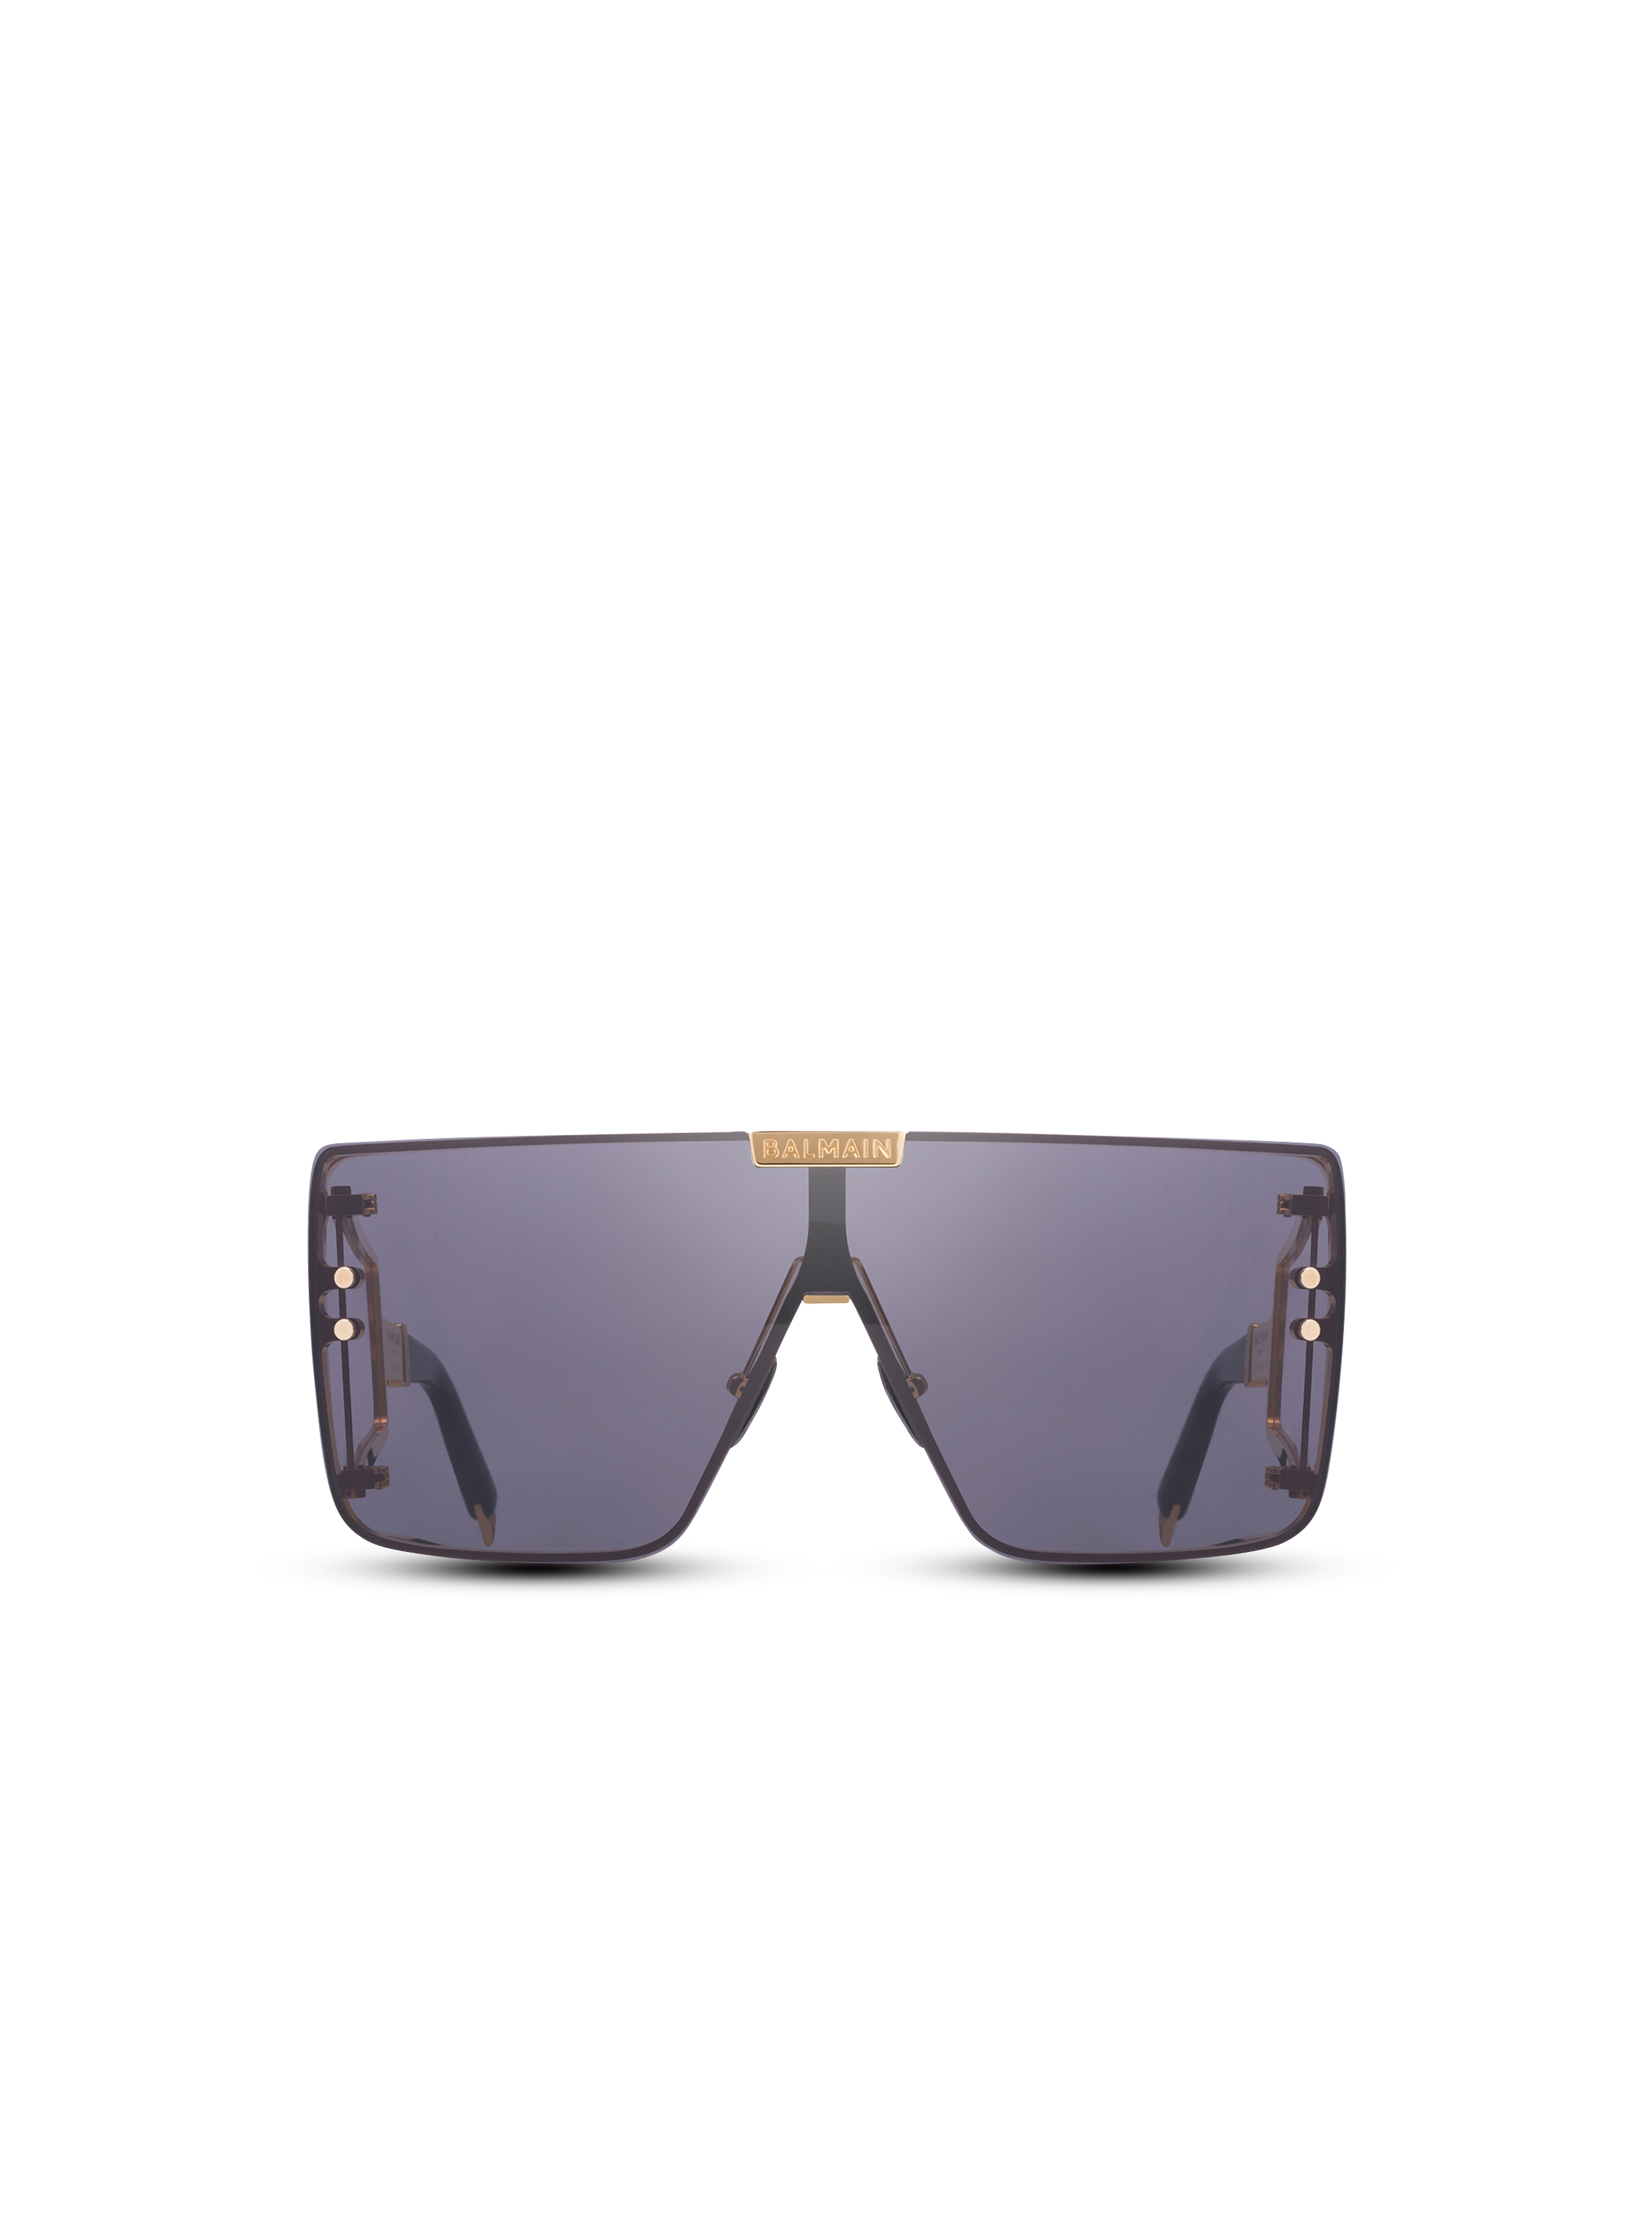 Gold-tone and dark gray titanium shield-shaped Wonder Boy sunglasses, black